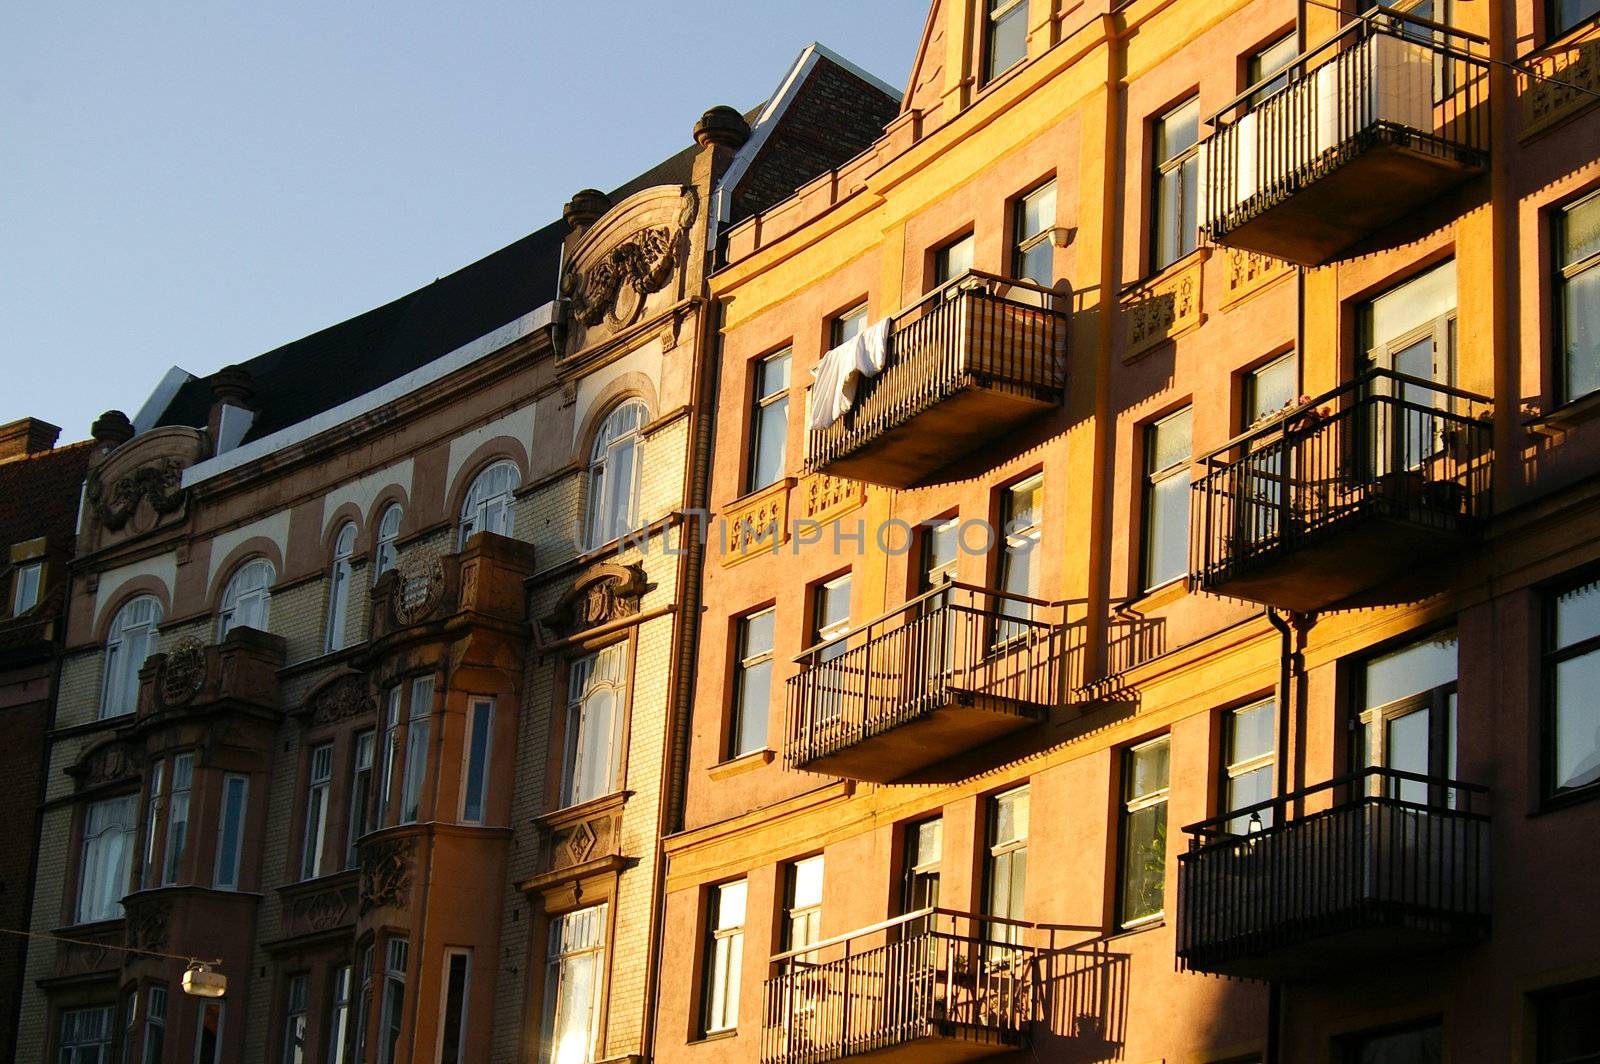 Typical facade building in Malno Sweeden